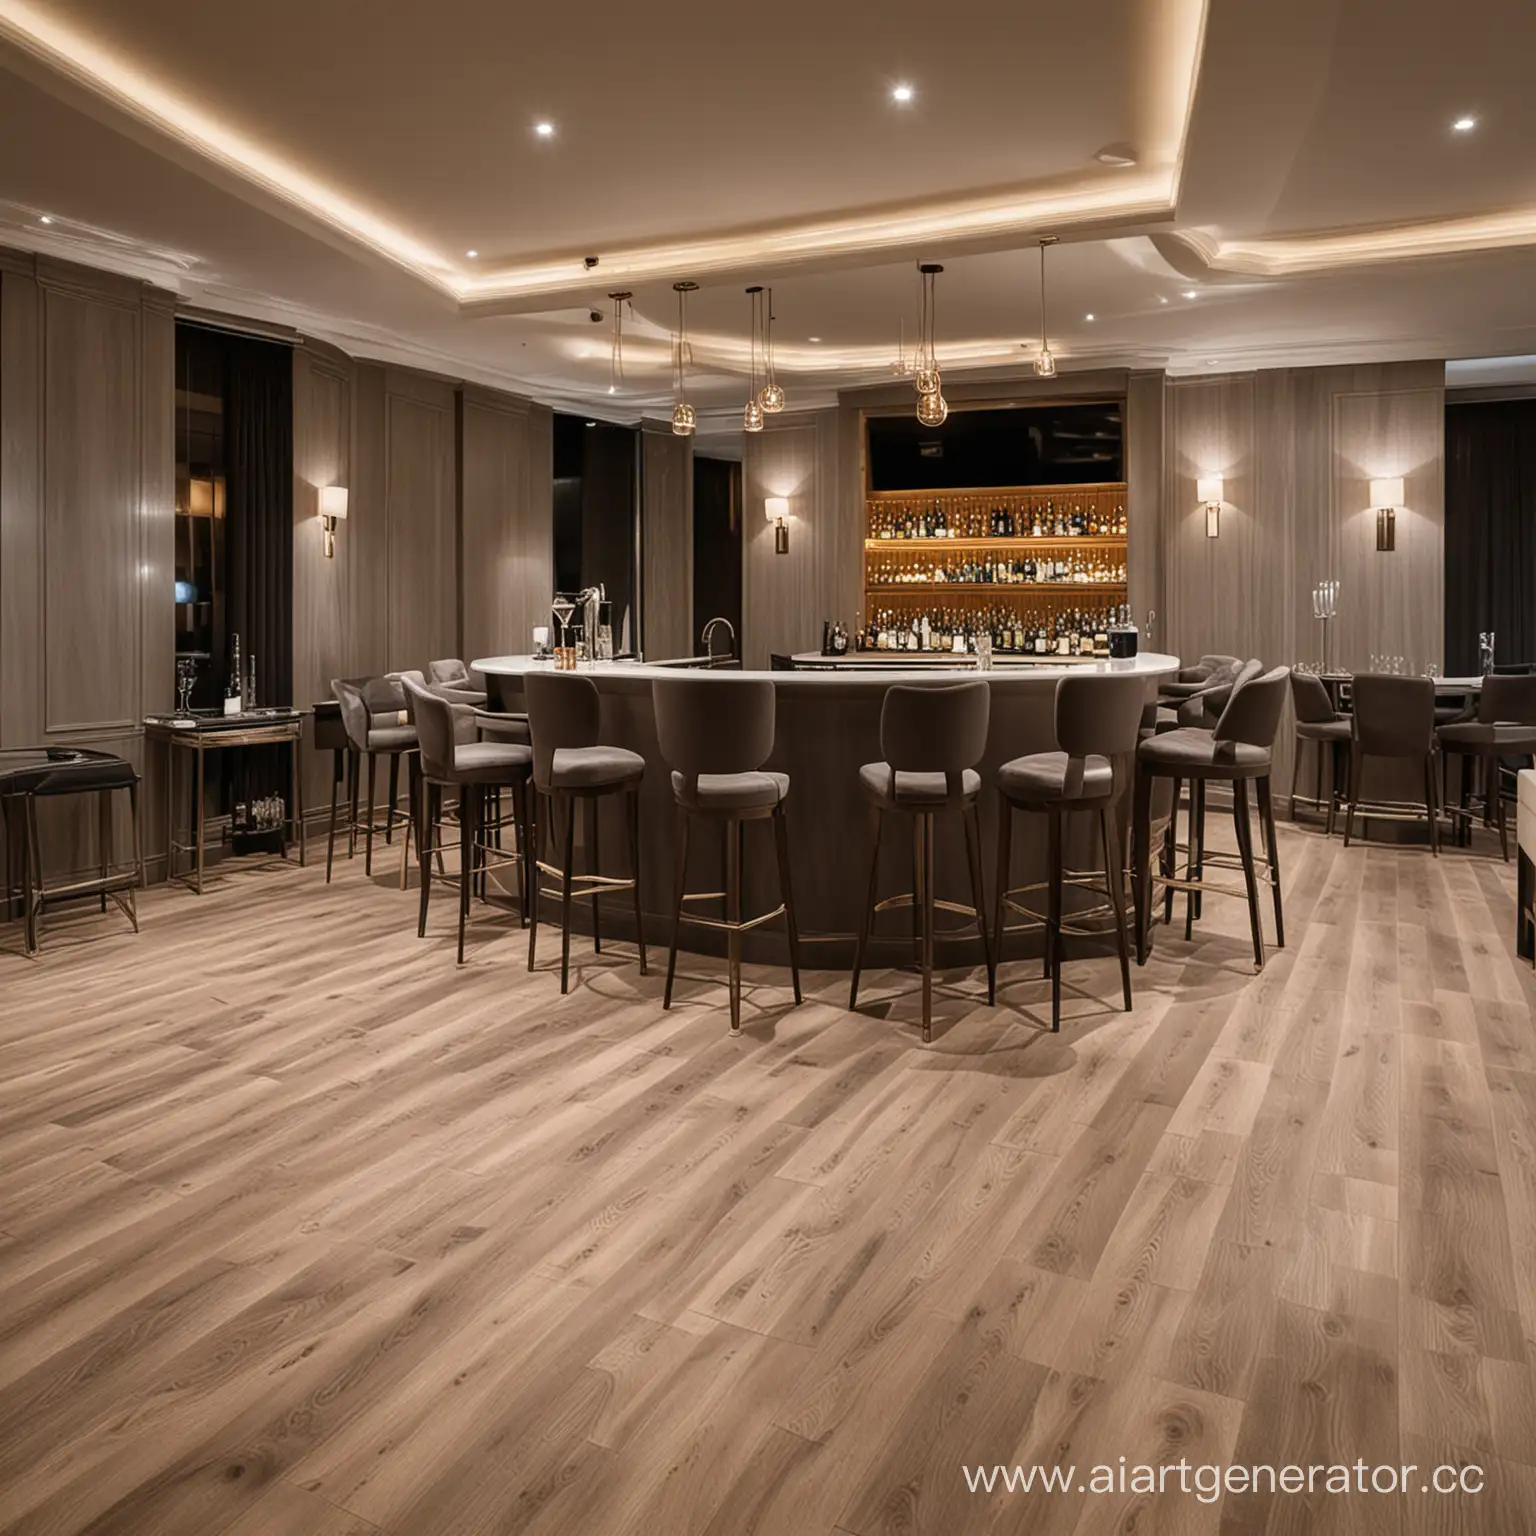 Luxurious-Business-Hotel-Bar-with-Elegant-Decor